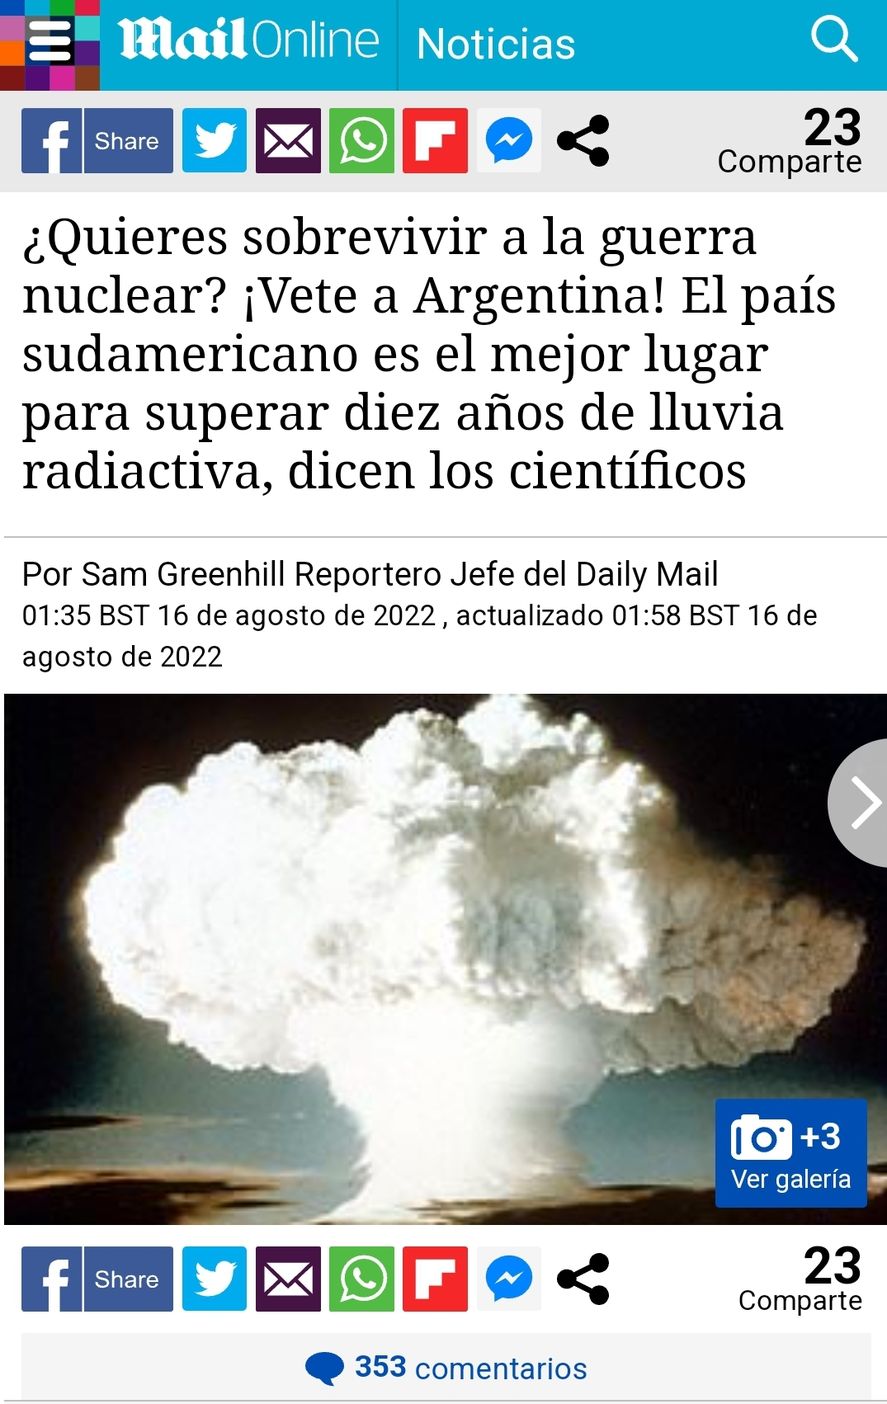 De esta manera títulóel diario inglés The Daily Mail la nota acerca de Argentina como el mejor lugar del mundo para sobrevivir a una guerra nuclear